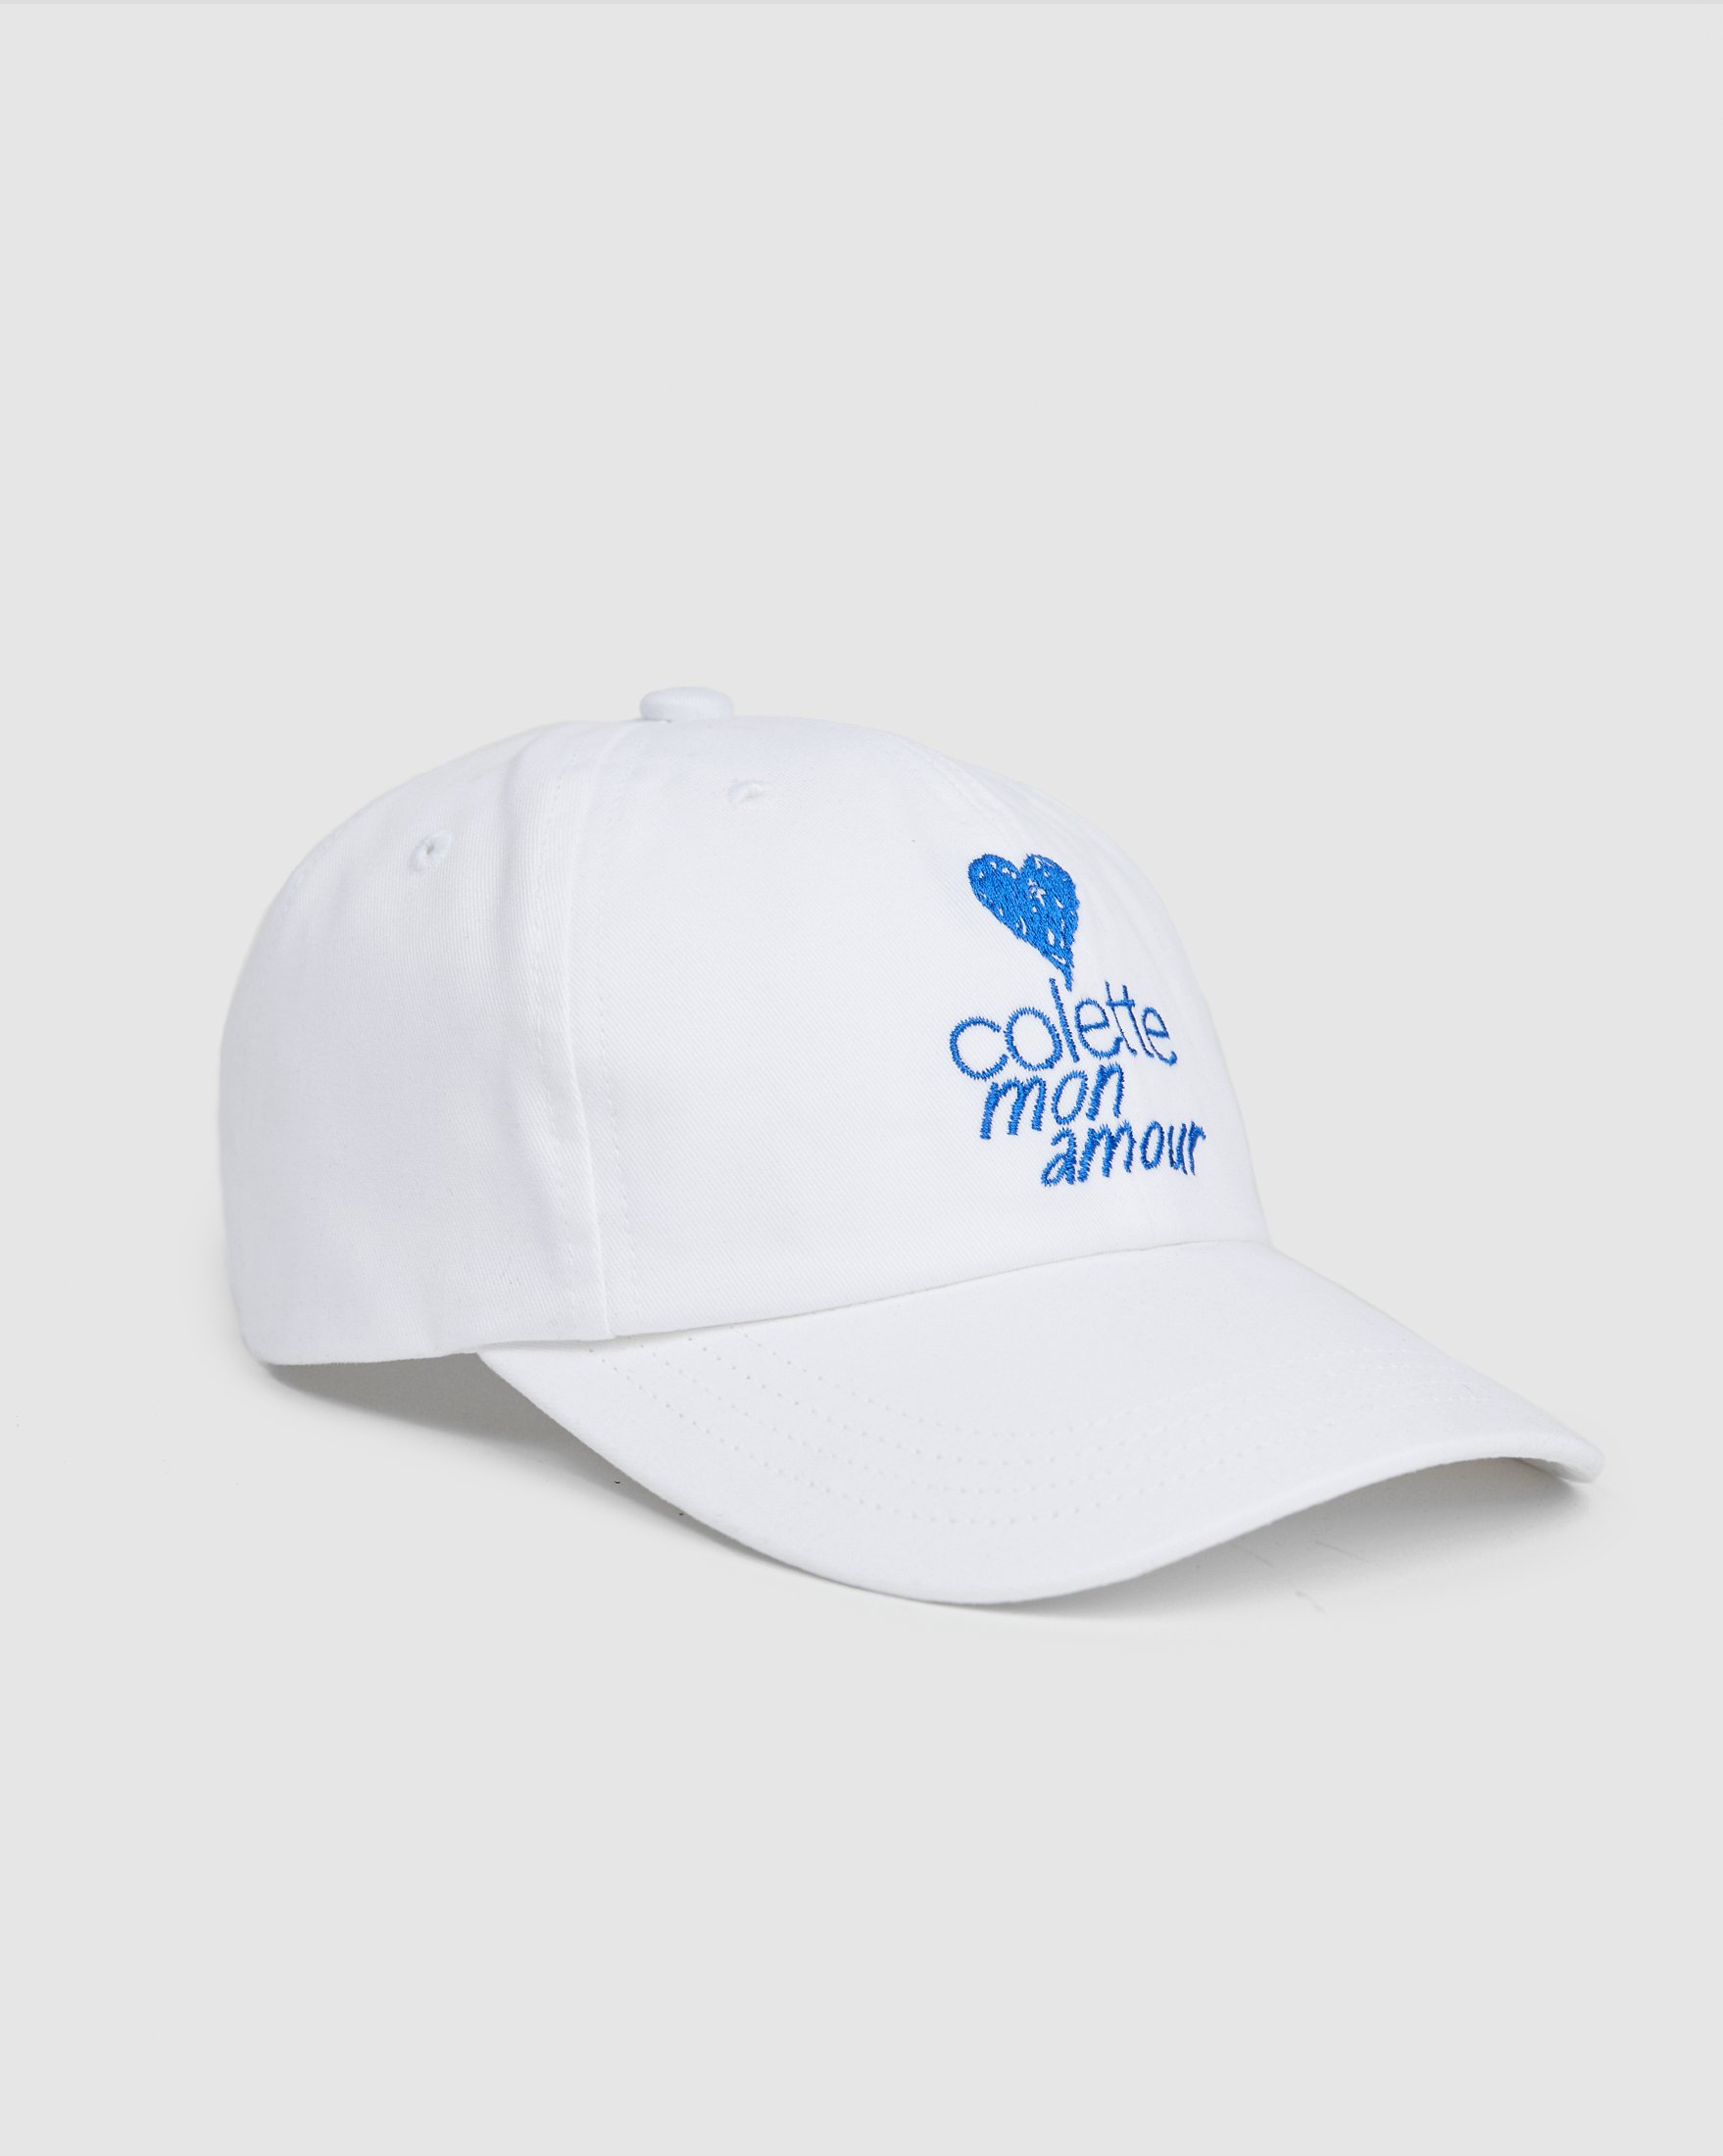 Colette Mon Amour - Heart Baseball Cap White - Caps - White - Image 1